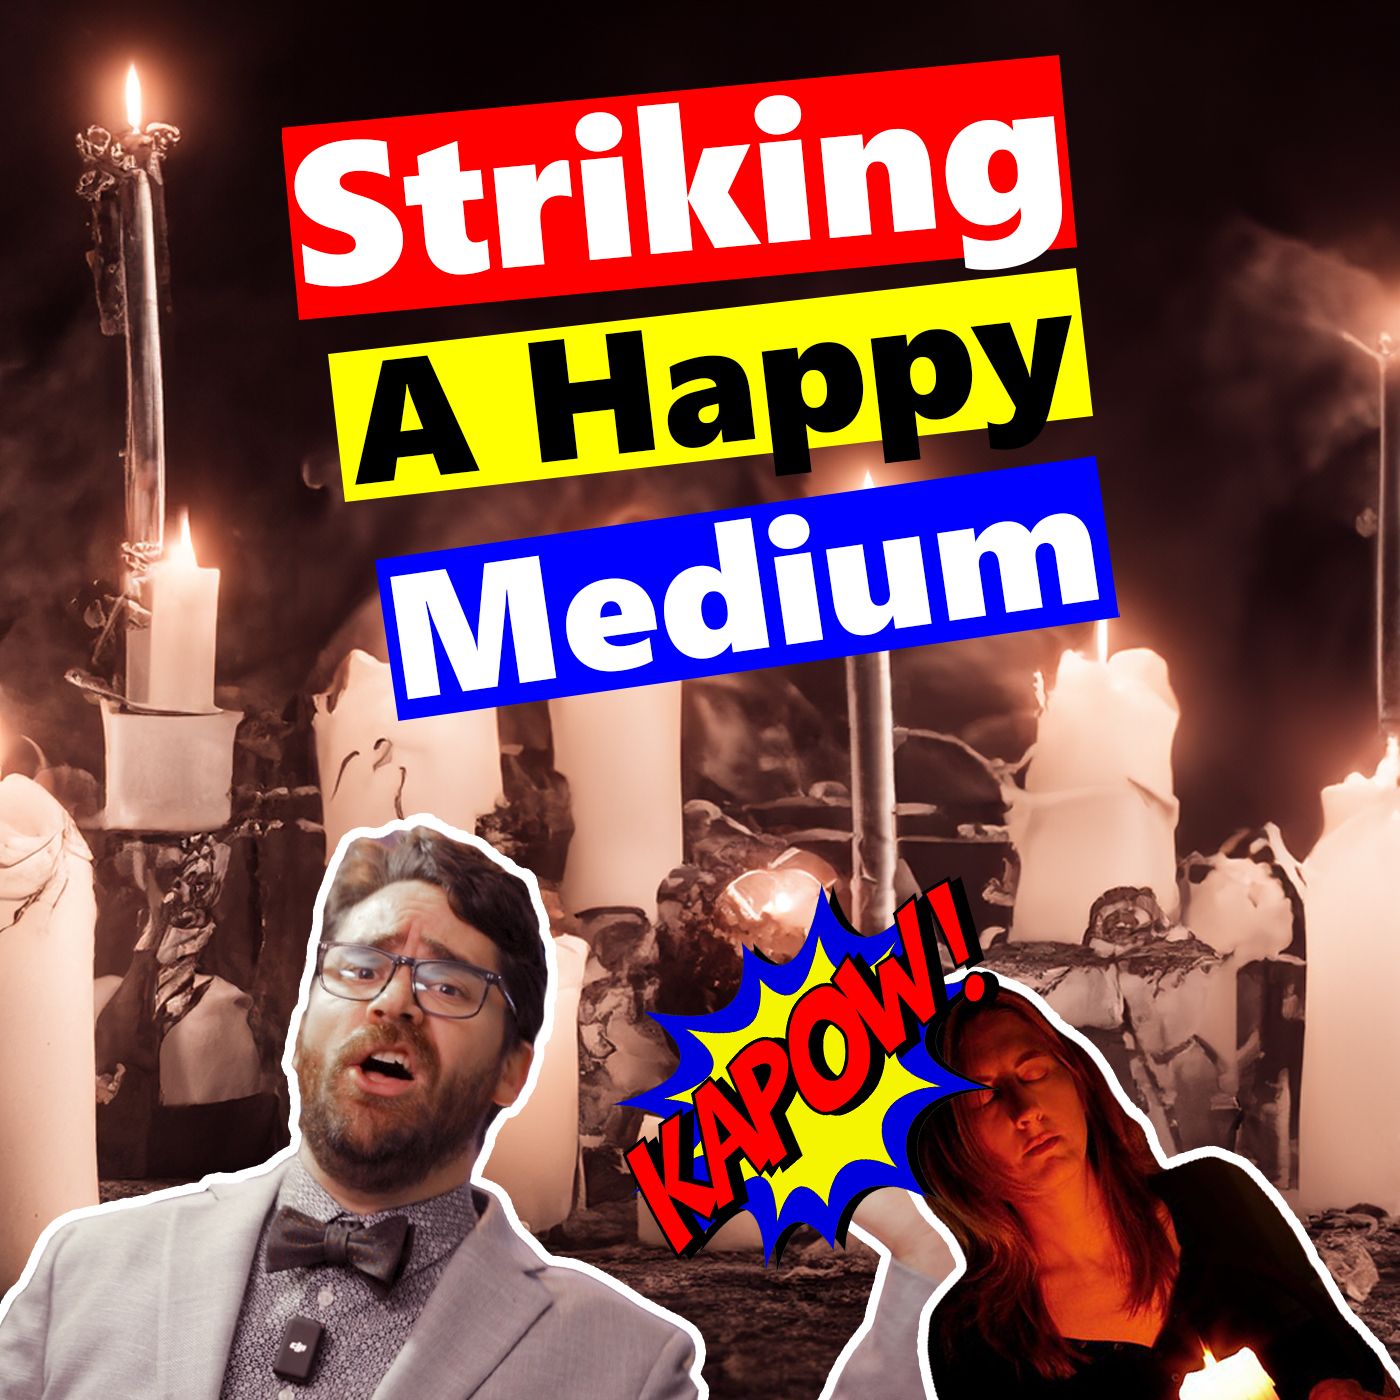 I Just Can't Strike a Happy Medium 😭